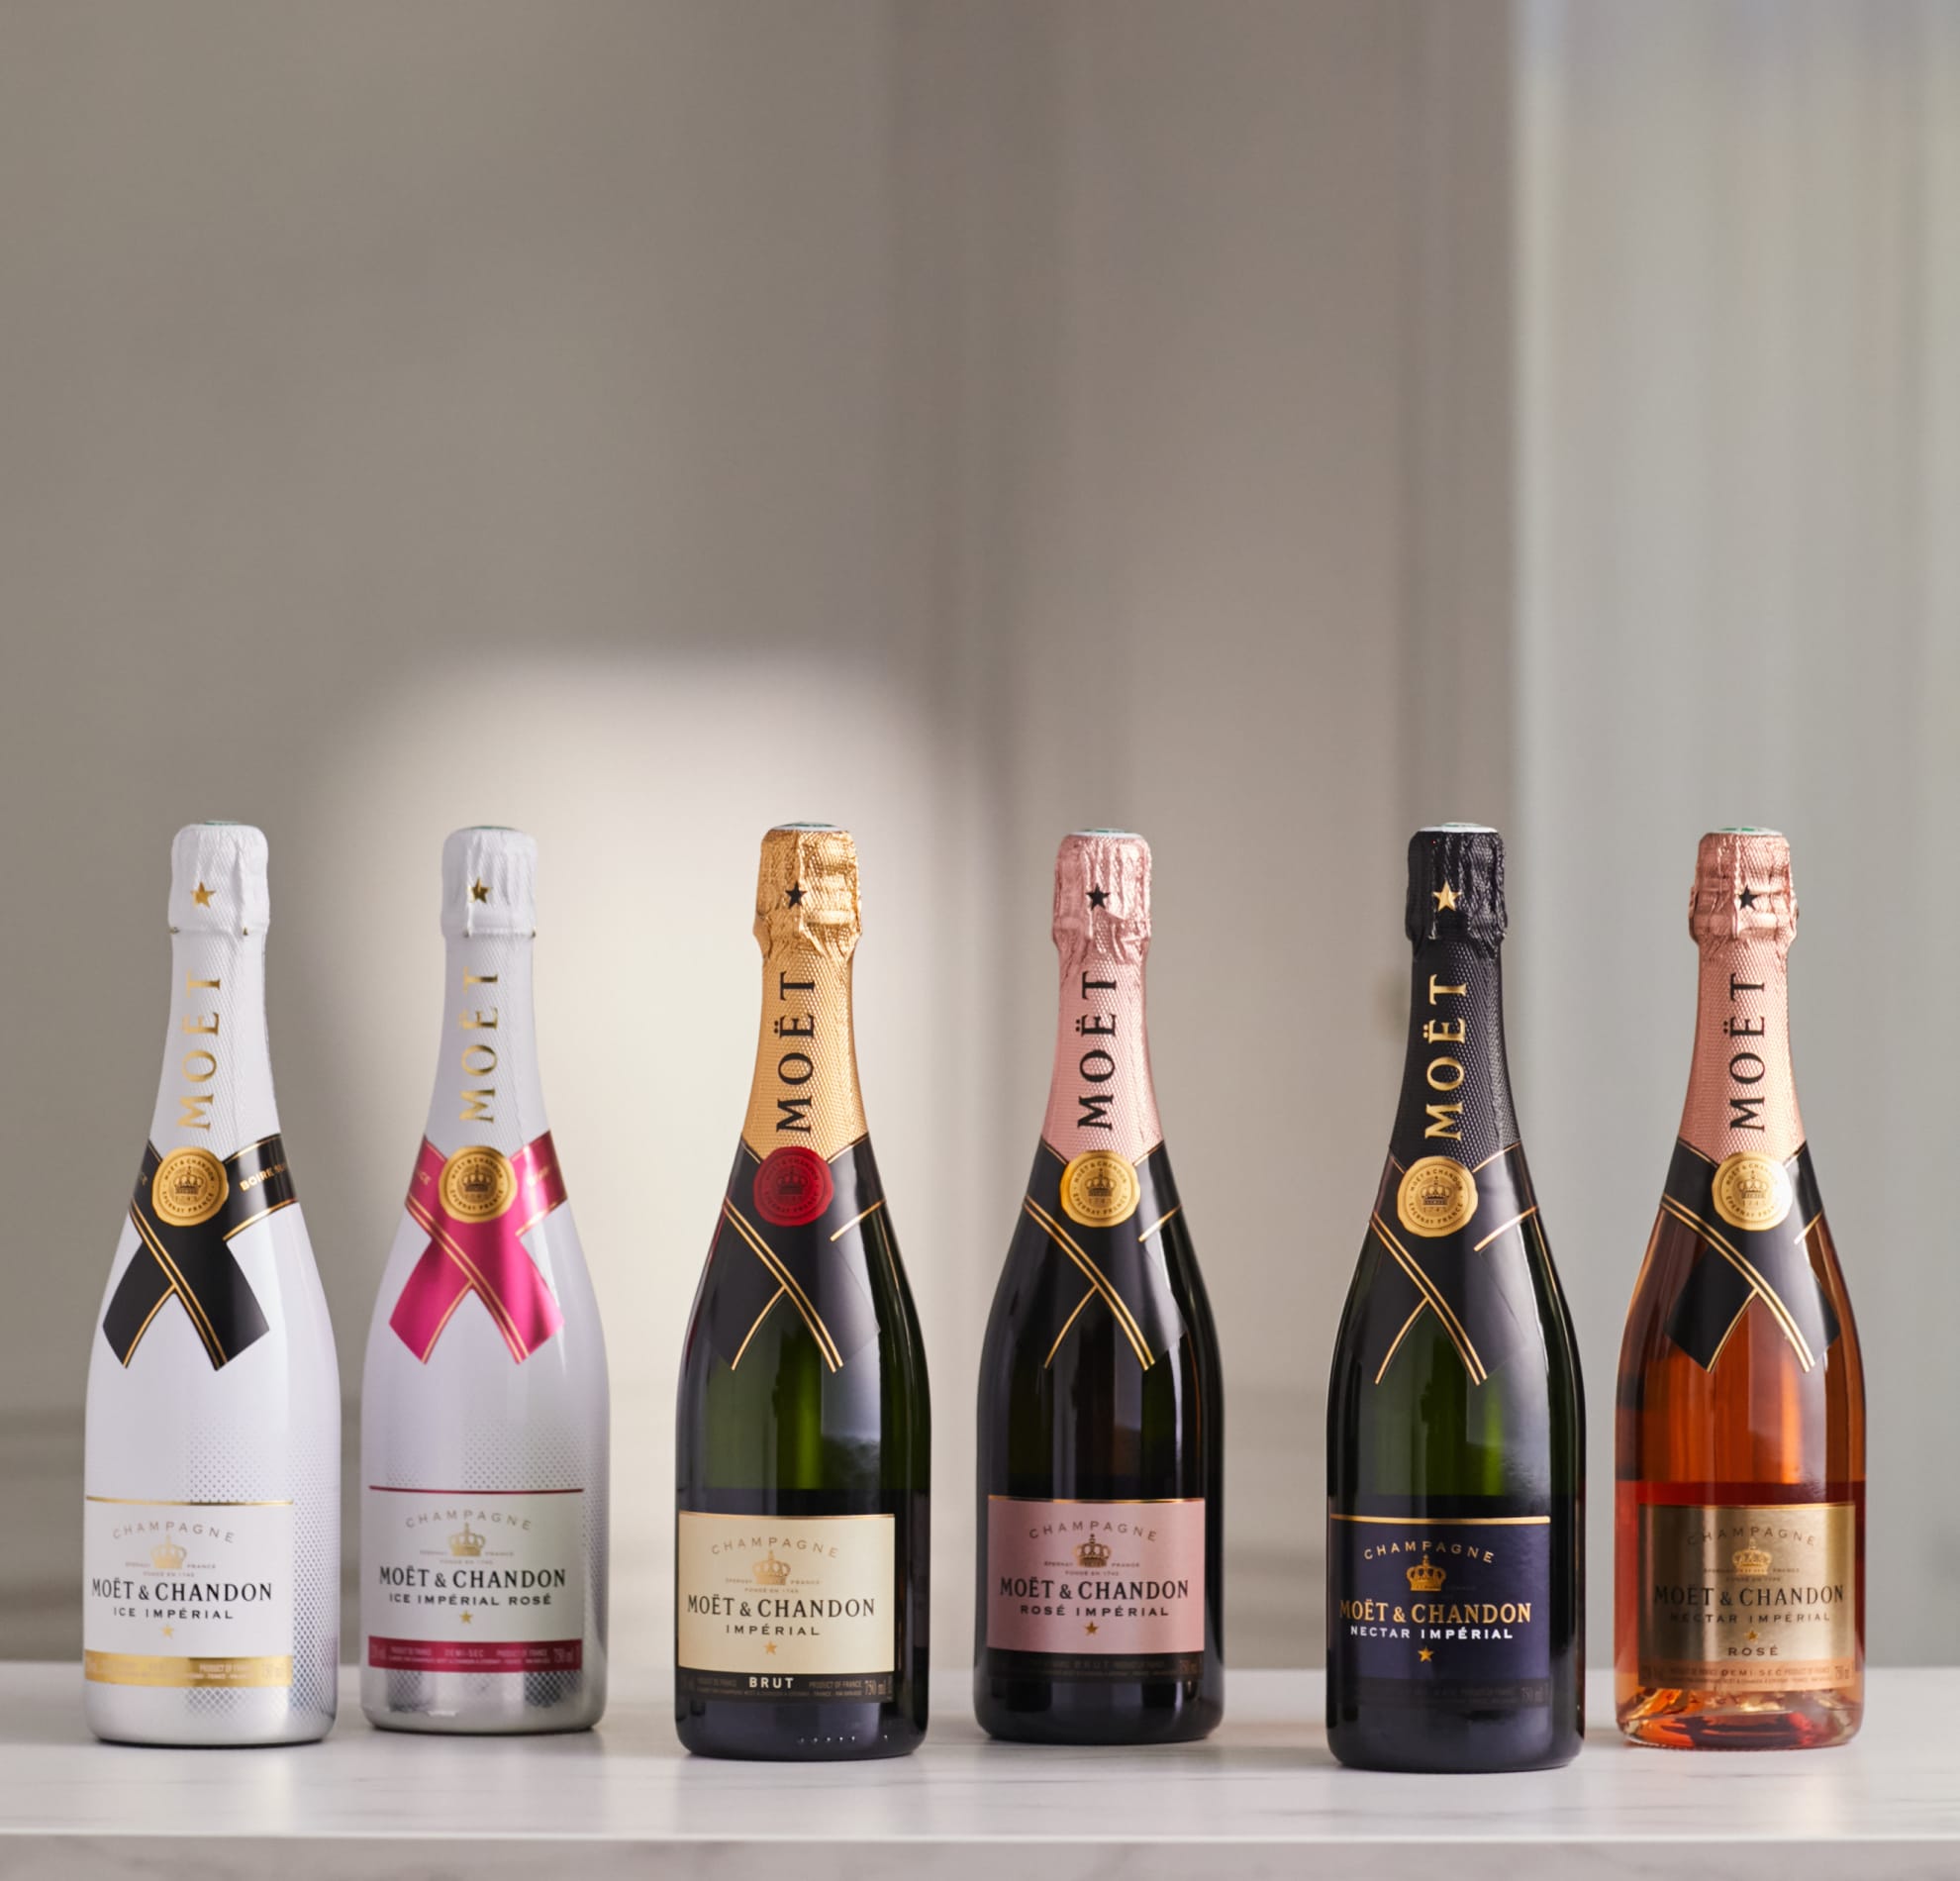 Champagne bottles in various sizes, Imperial, Moet et Chandon